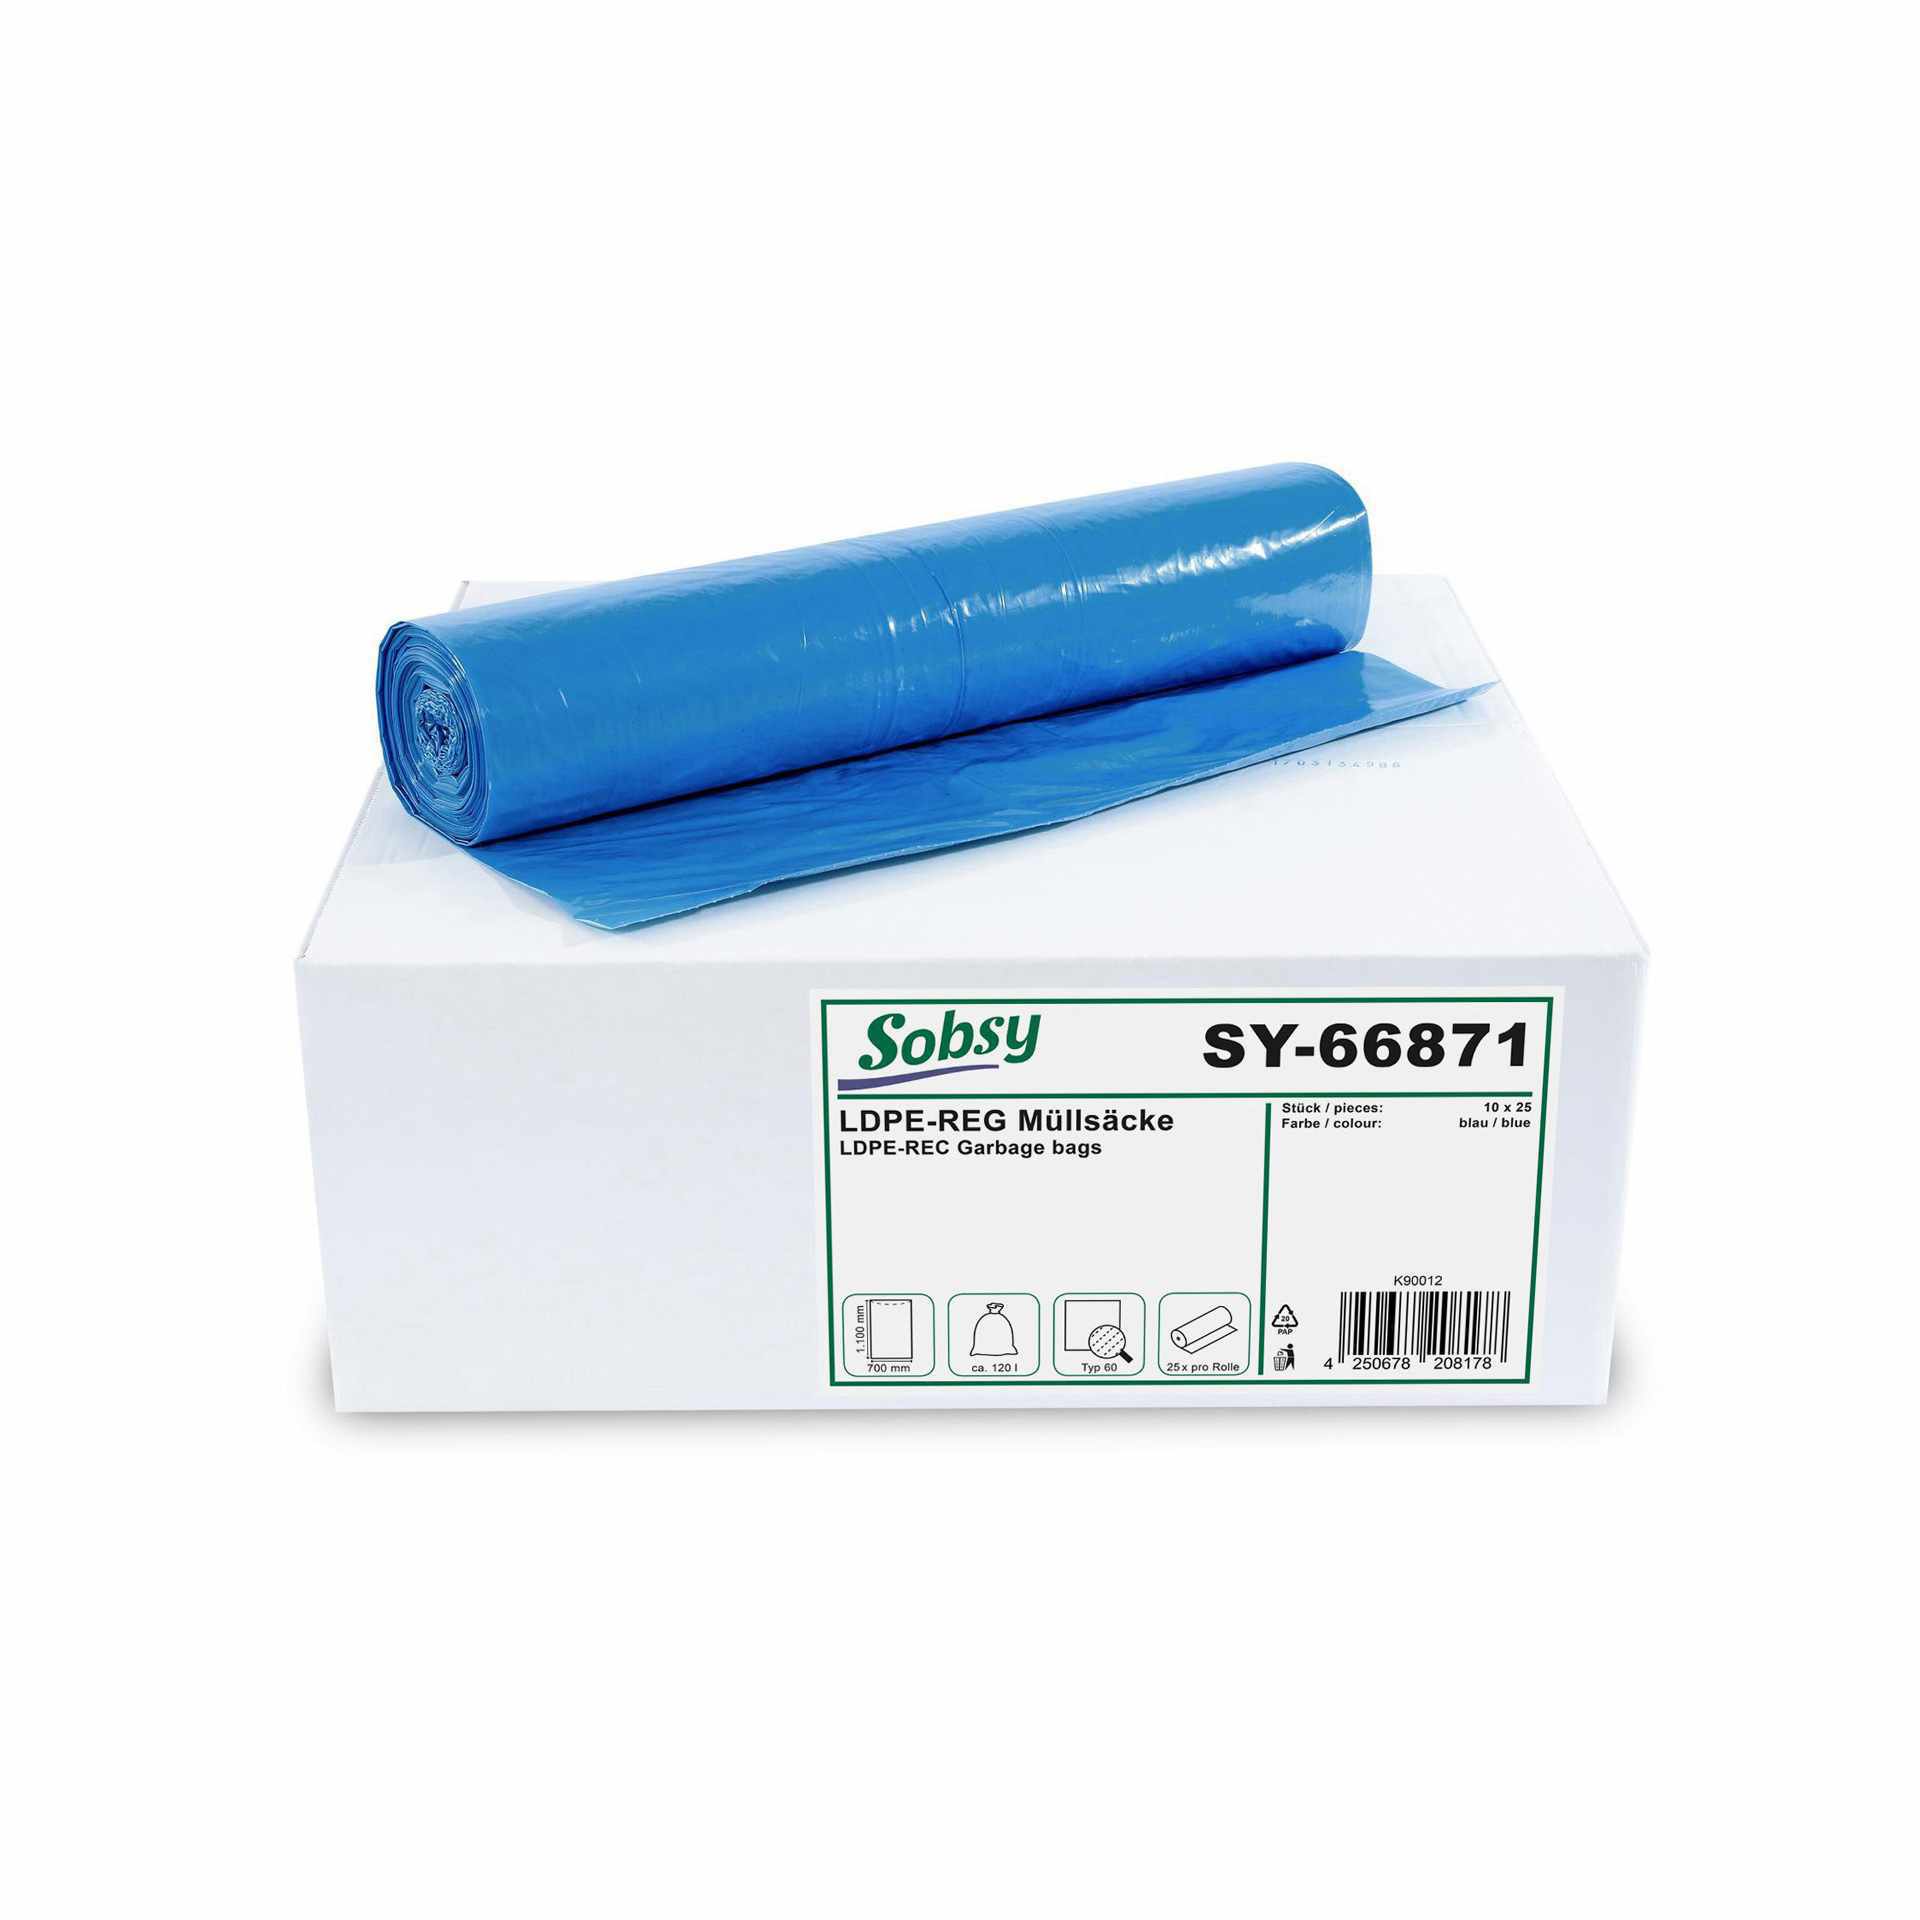 Müllsäcke - Typ 60 - blau - Abm. 70,0 x 110,0 cm - Inhalt 120,0 l - LDPE-Regenerat - SY-66871-G